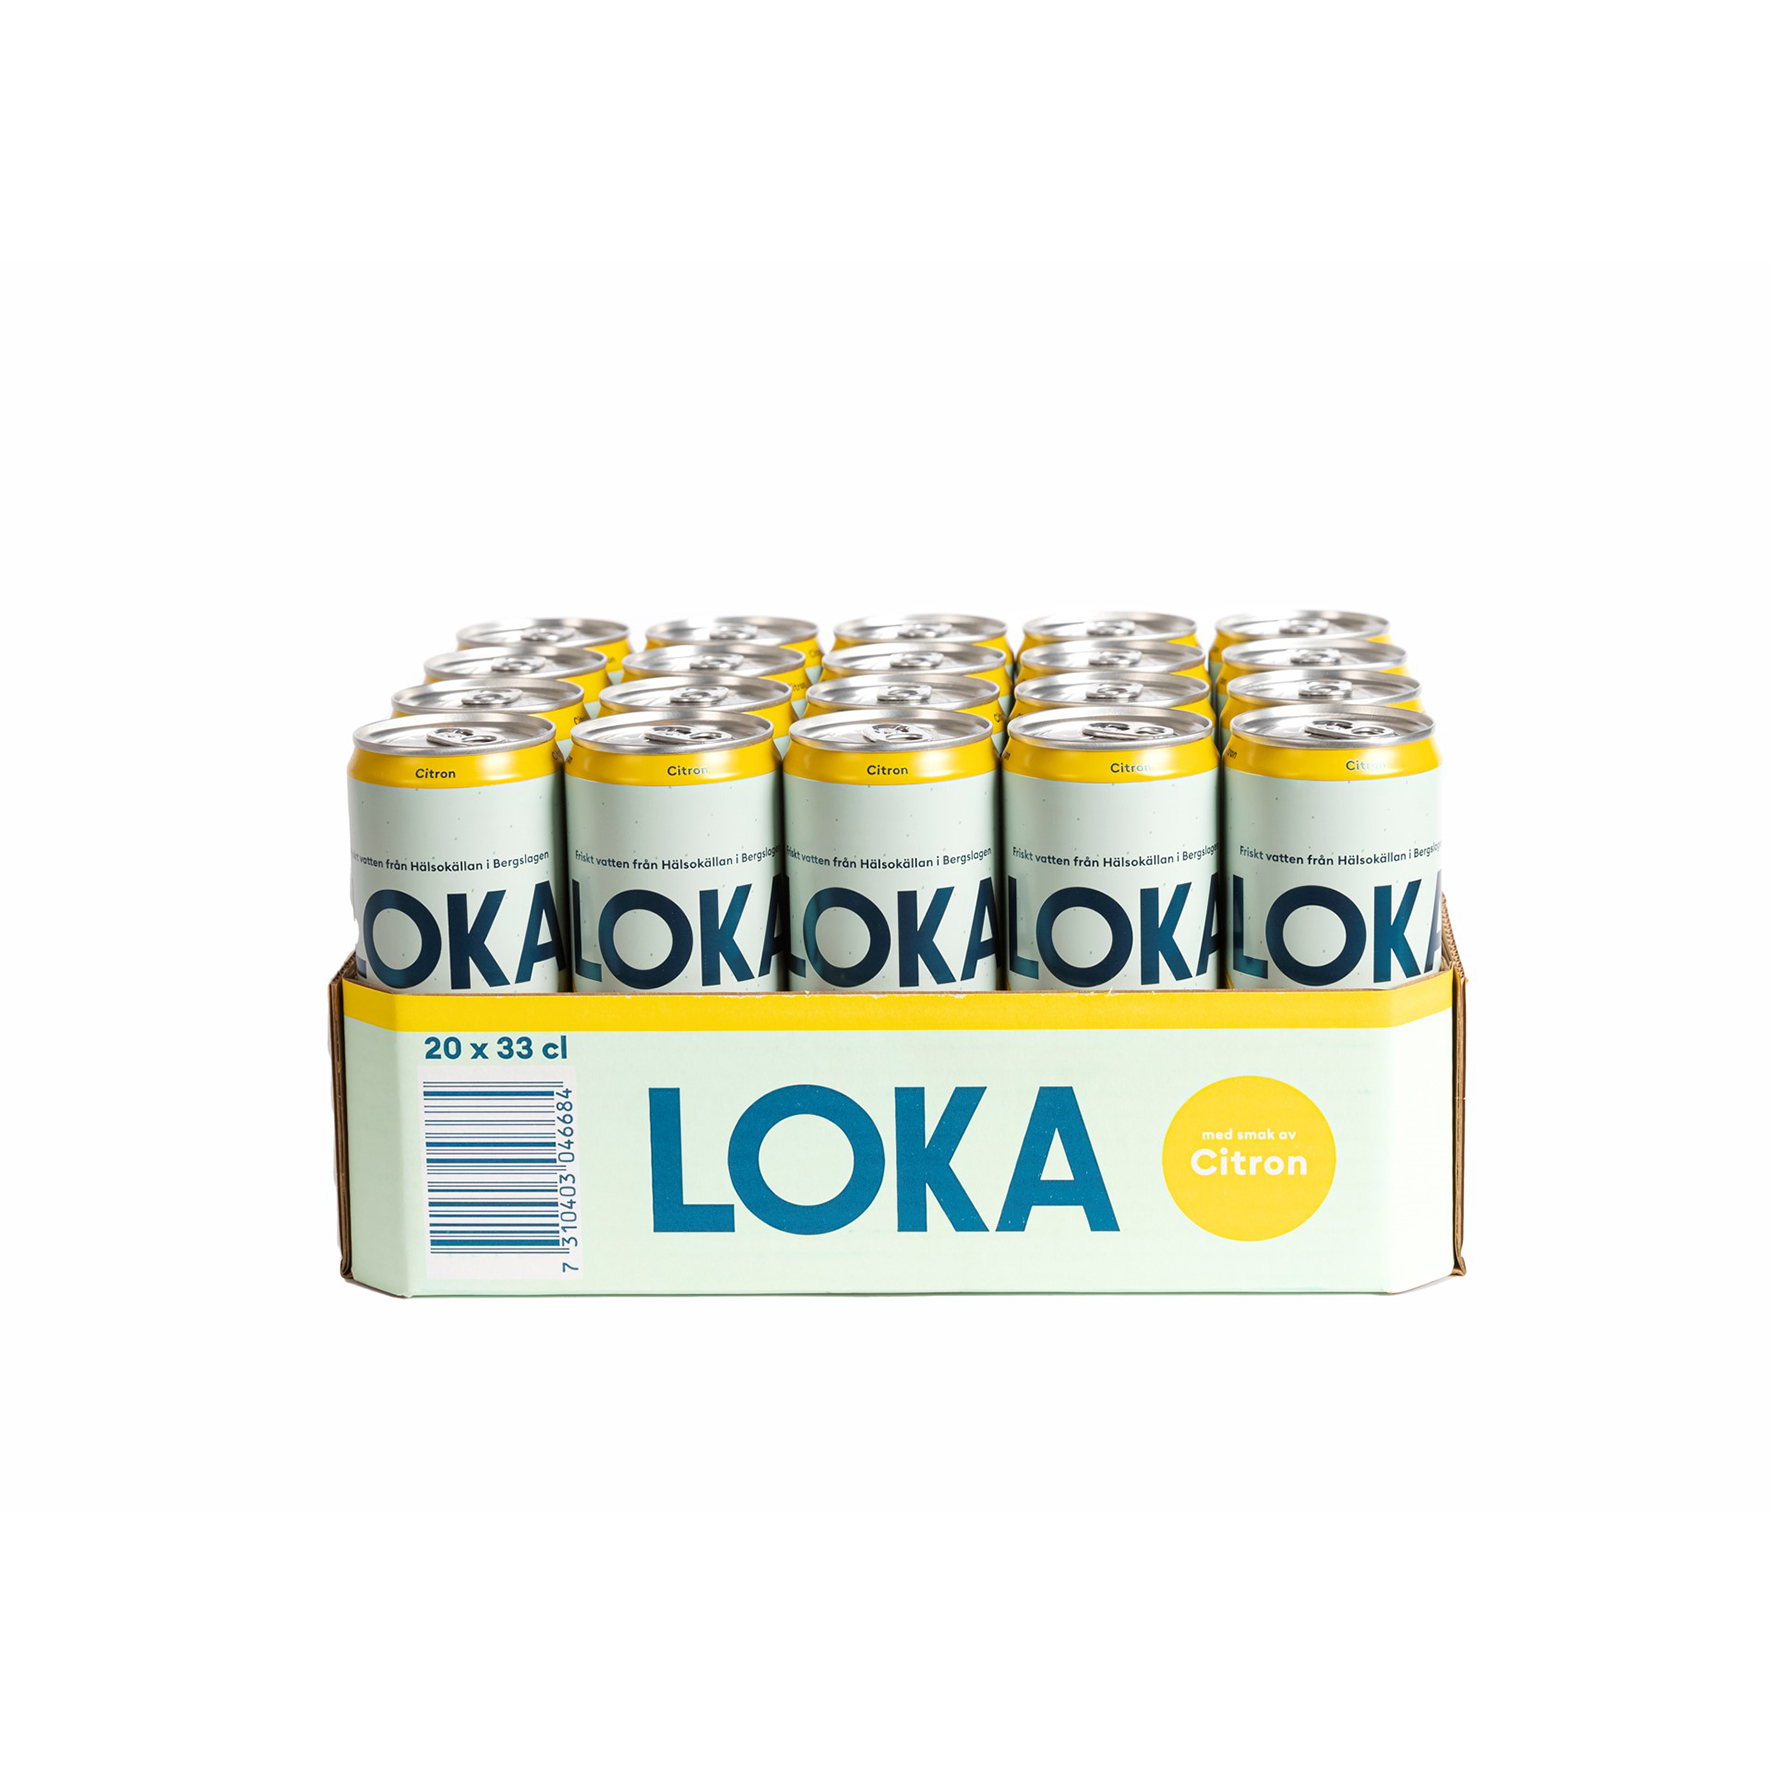 [8560081] Loka Citron 33cl sleek can